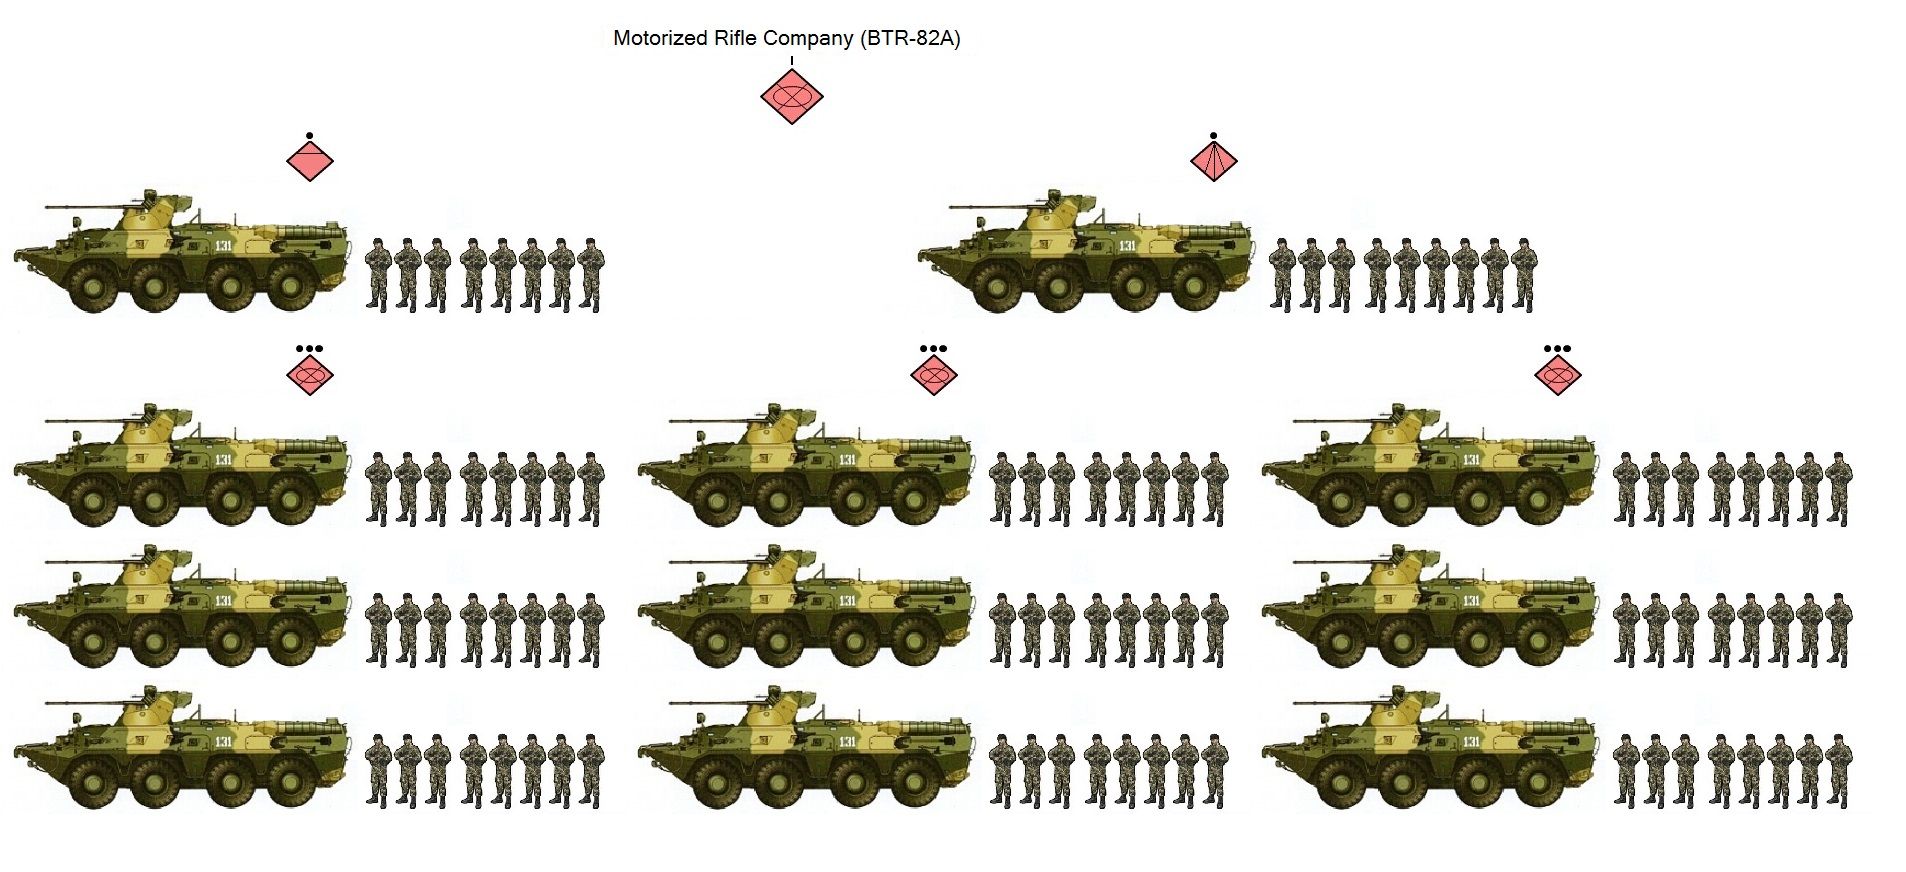 Russian Motorized Rifle Company (BTR-82A).jpg